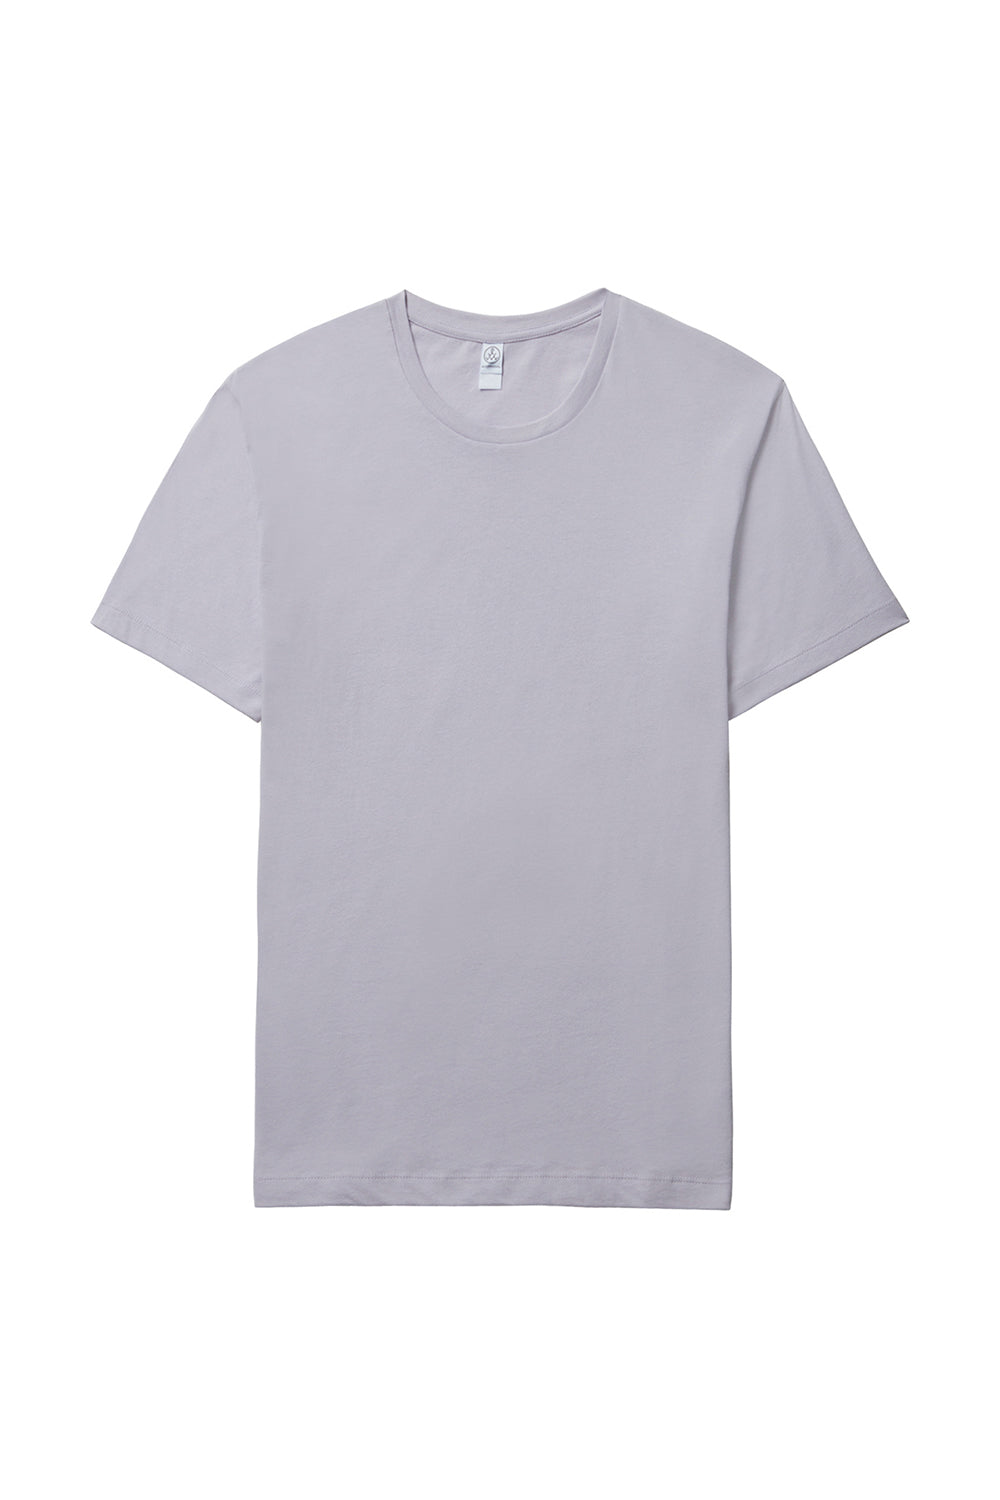 Alternative AA1070/1070 Mens Go To Jersey Short Sleeve Crewneck T-Shirt Lilac Purple Mist Flat Front